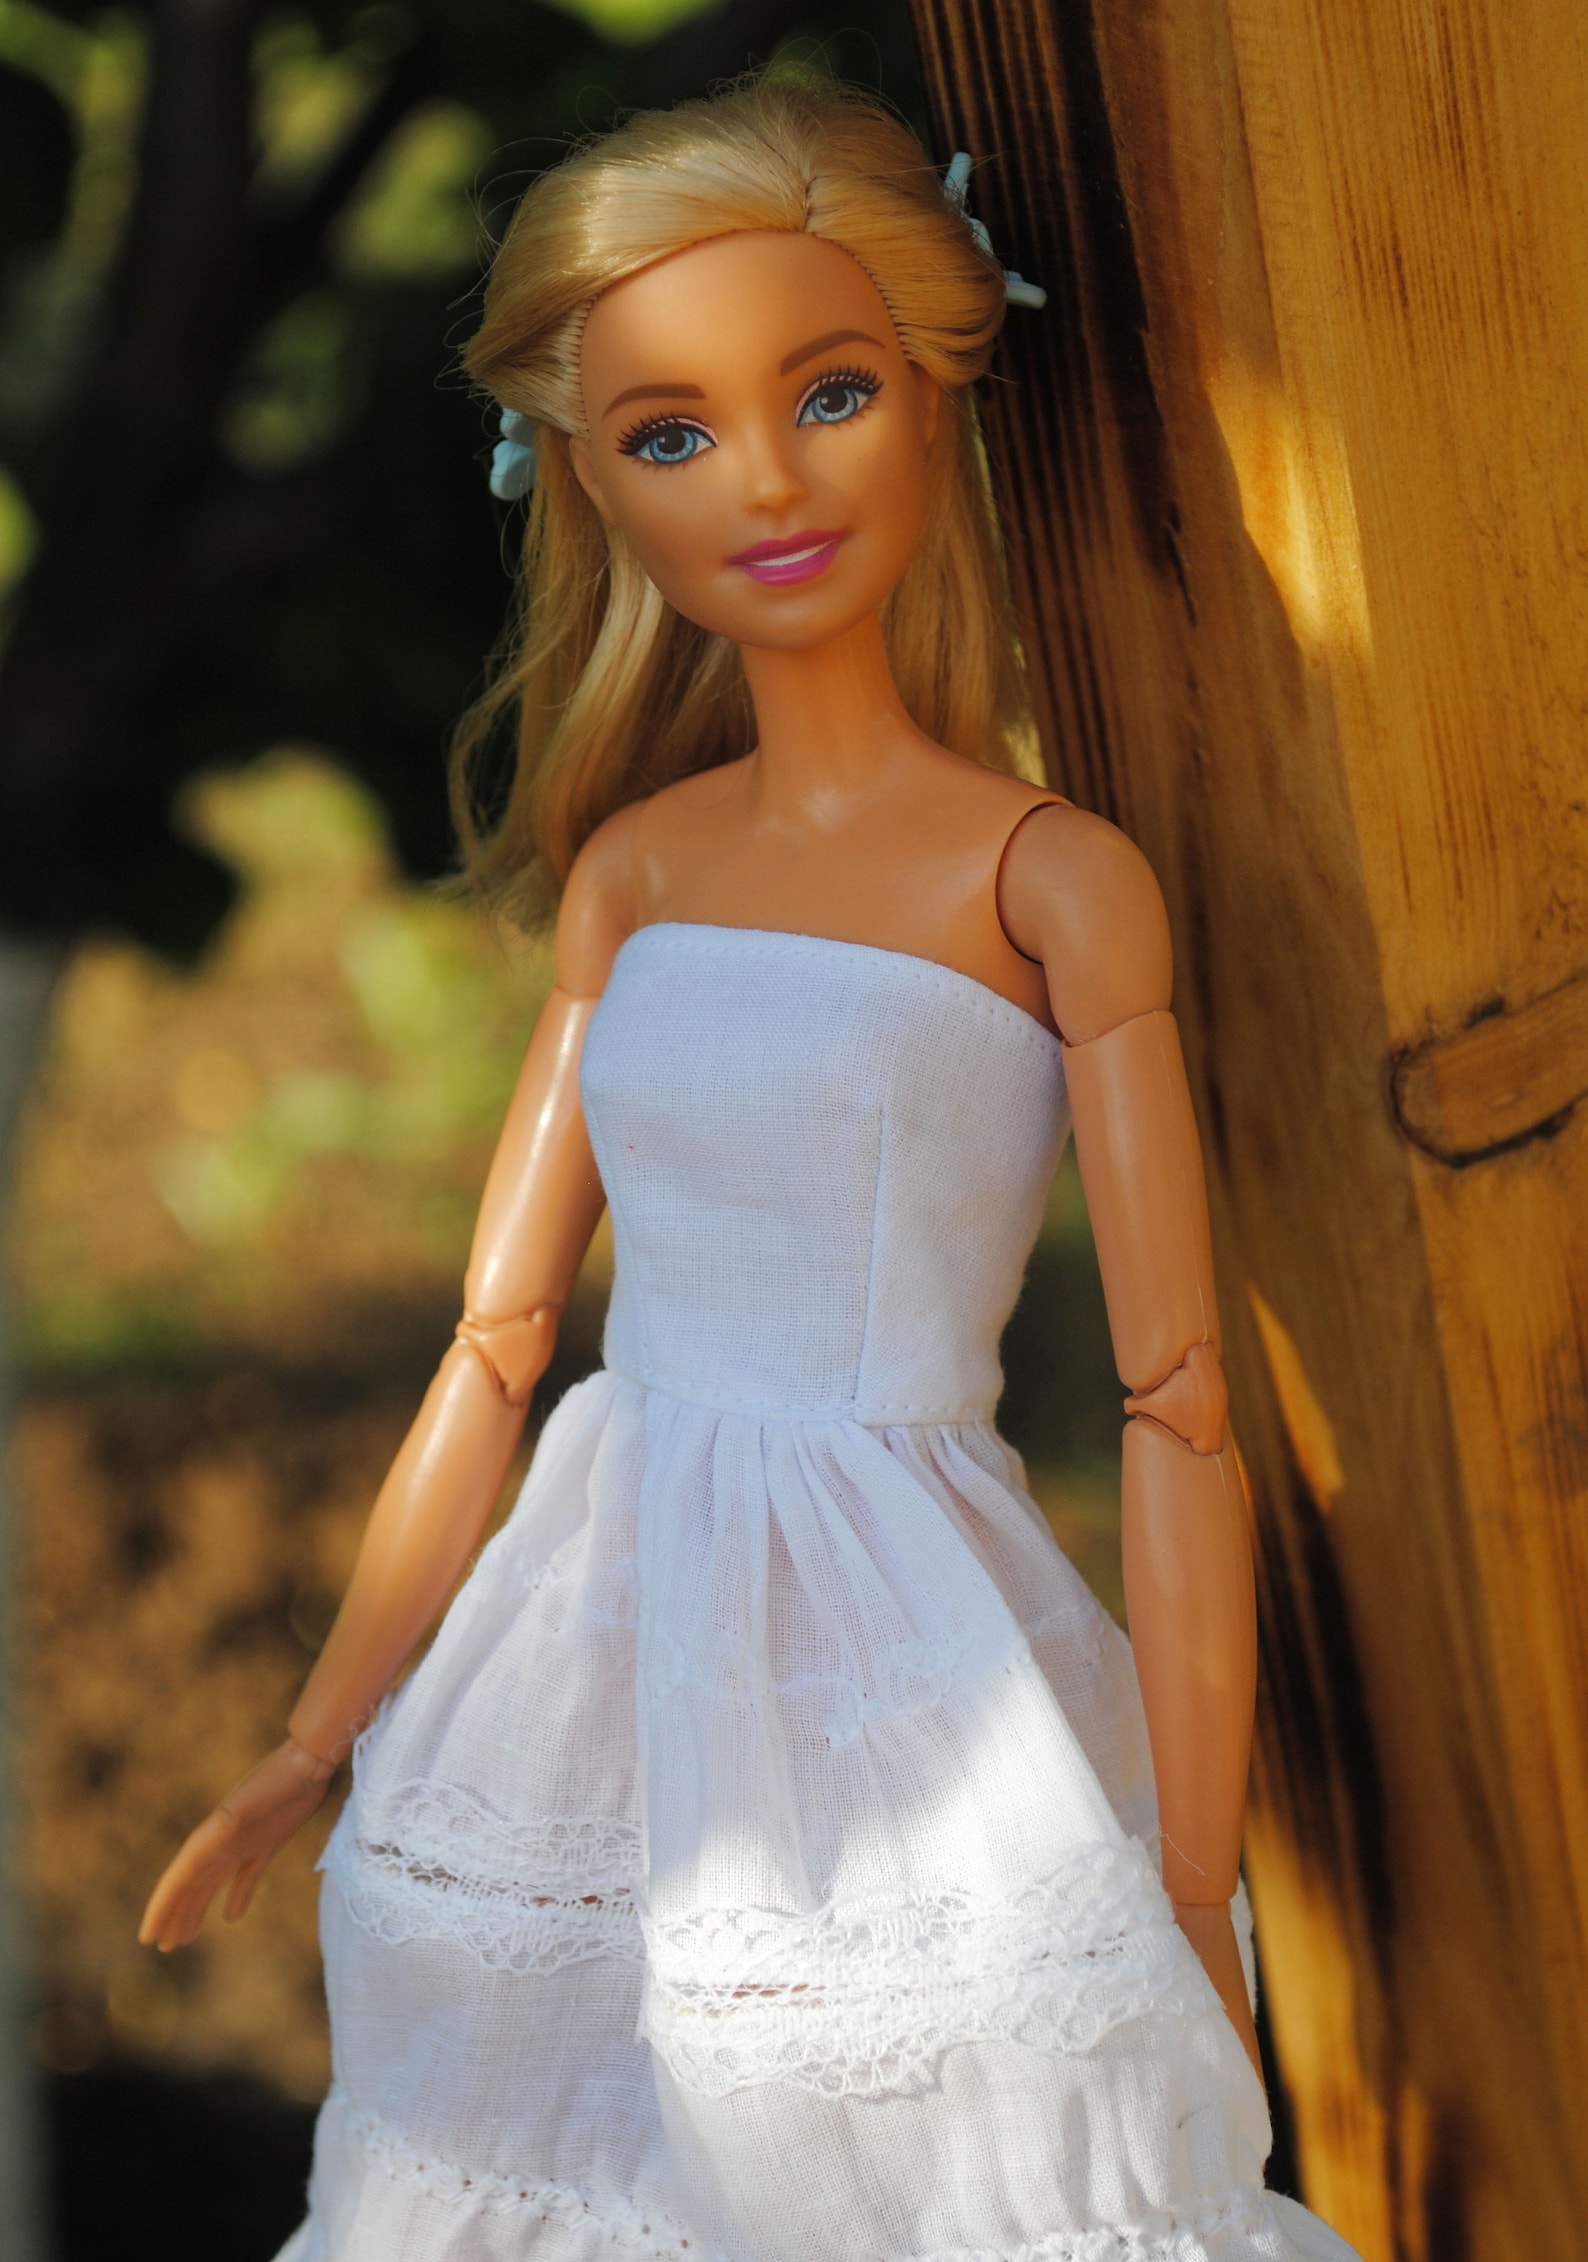 Barbie Doll Images Full Hd ~ Barbie Doll Wallpapers Wallpaper Hd Dolls ...